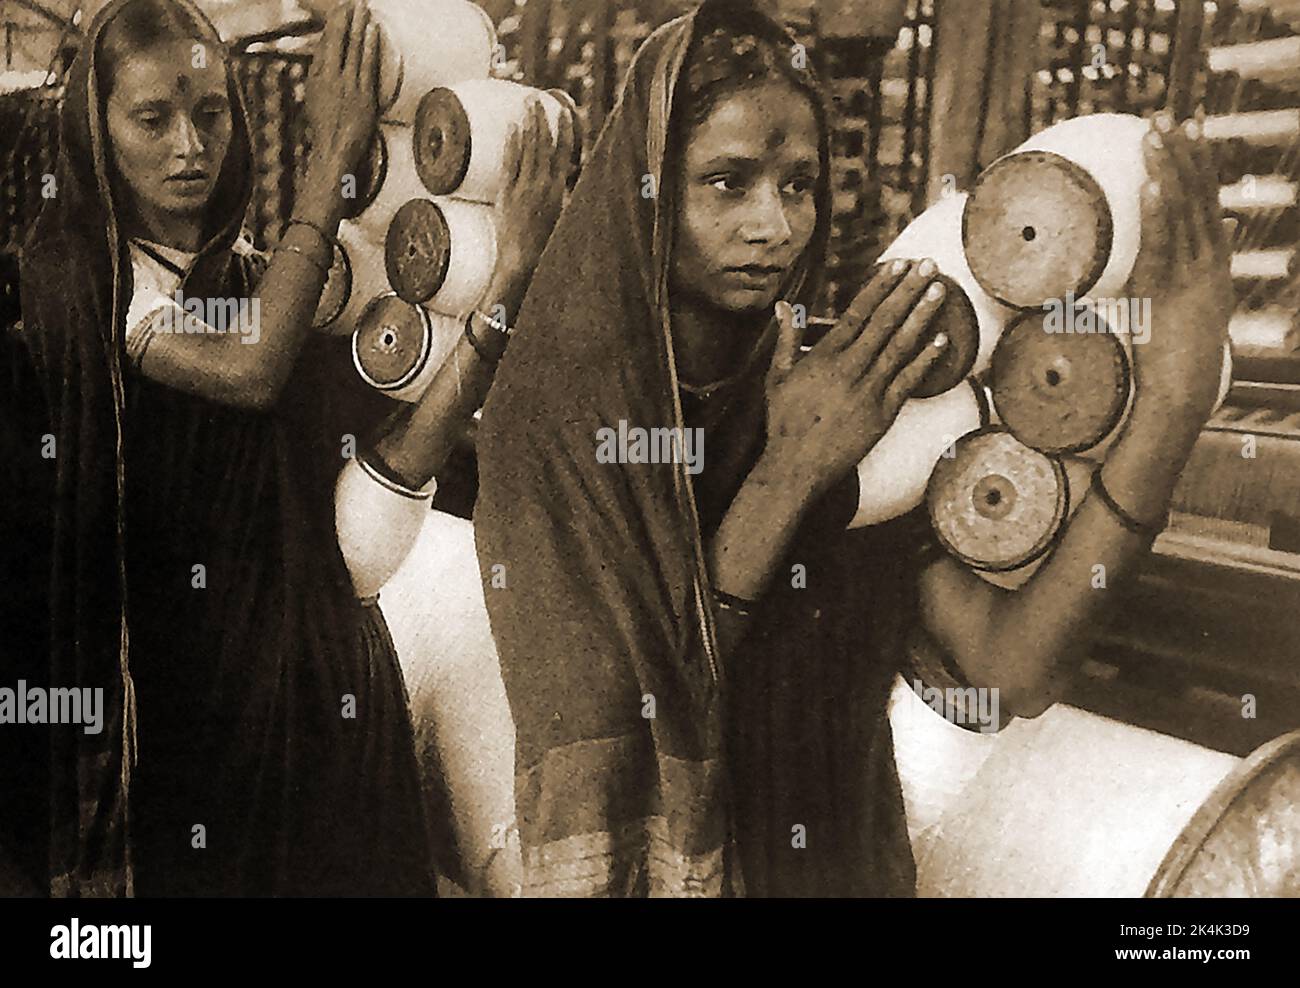 Les travailleurs indiens des années 1940 (après la guerre) transportent des bobines dans un moulin à coton de Bombay (aujourd'hui Mumbai). ---- ۱۹۴۰ کی دہائی (جنگ کے بعد) بمبئی (اب ممبئی) کی ایک کاٹن مل میں ہندوستانی مزدور بوبن لے کر جا رہے ہیں۔ ------ 1940 के दशक (युद्ध के बाद) भारतीय श्रमिक बॉम्बे (अब मुंबई) में एक कपास मिल में बोबिन ले जाते हैं। Banque D'Images